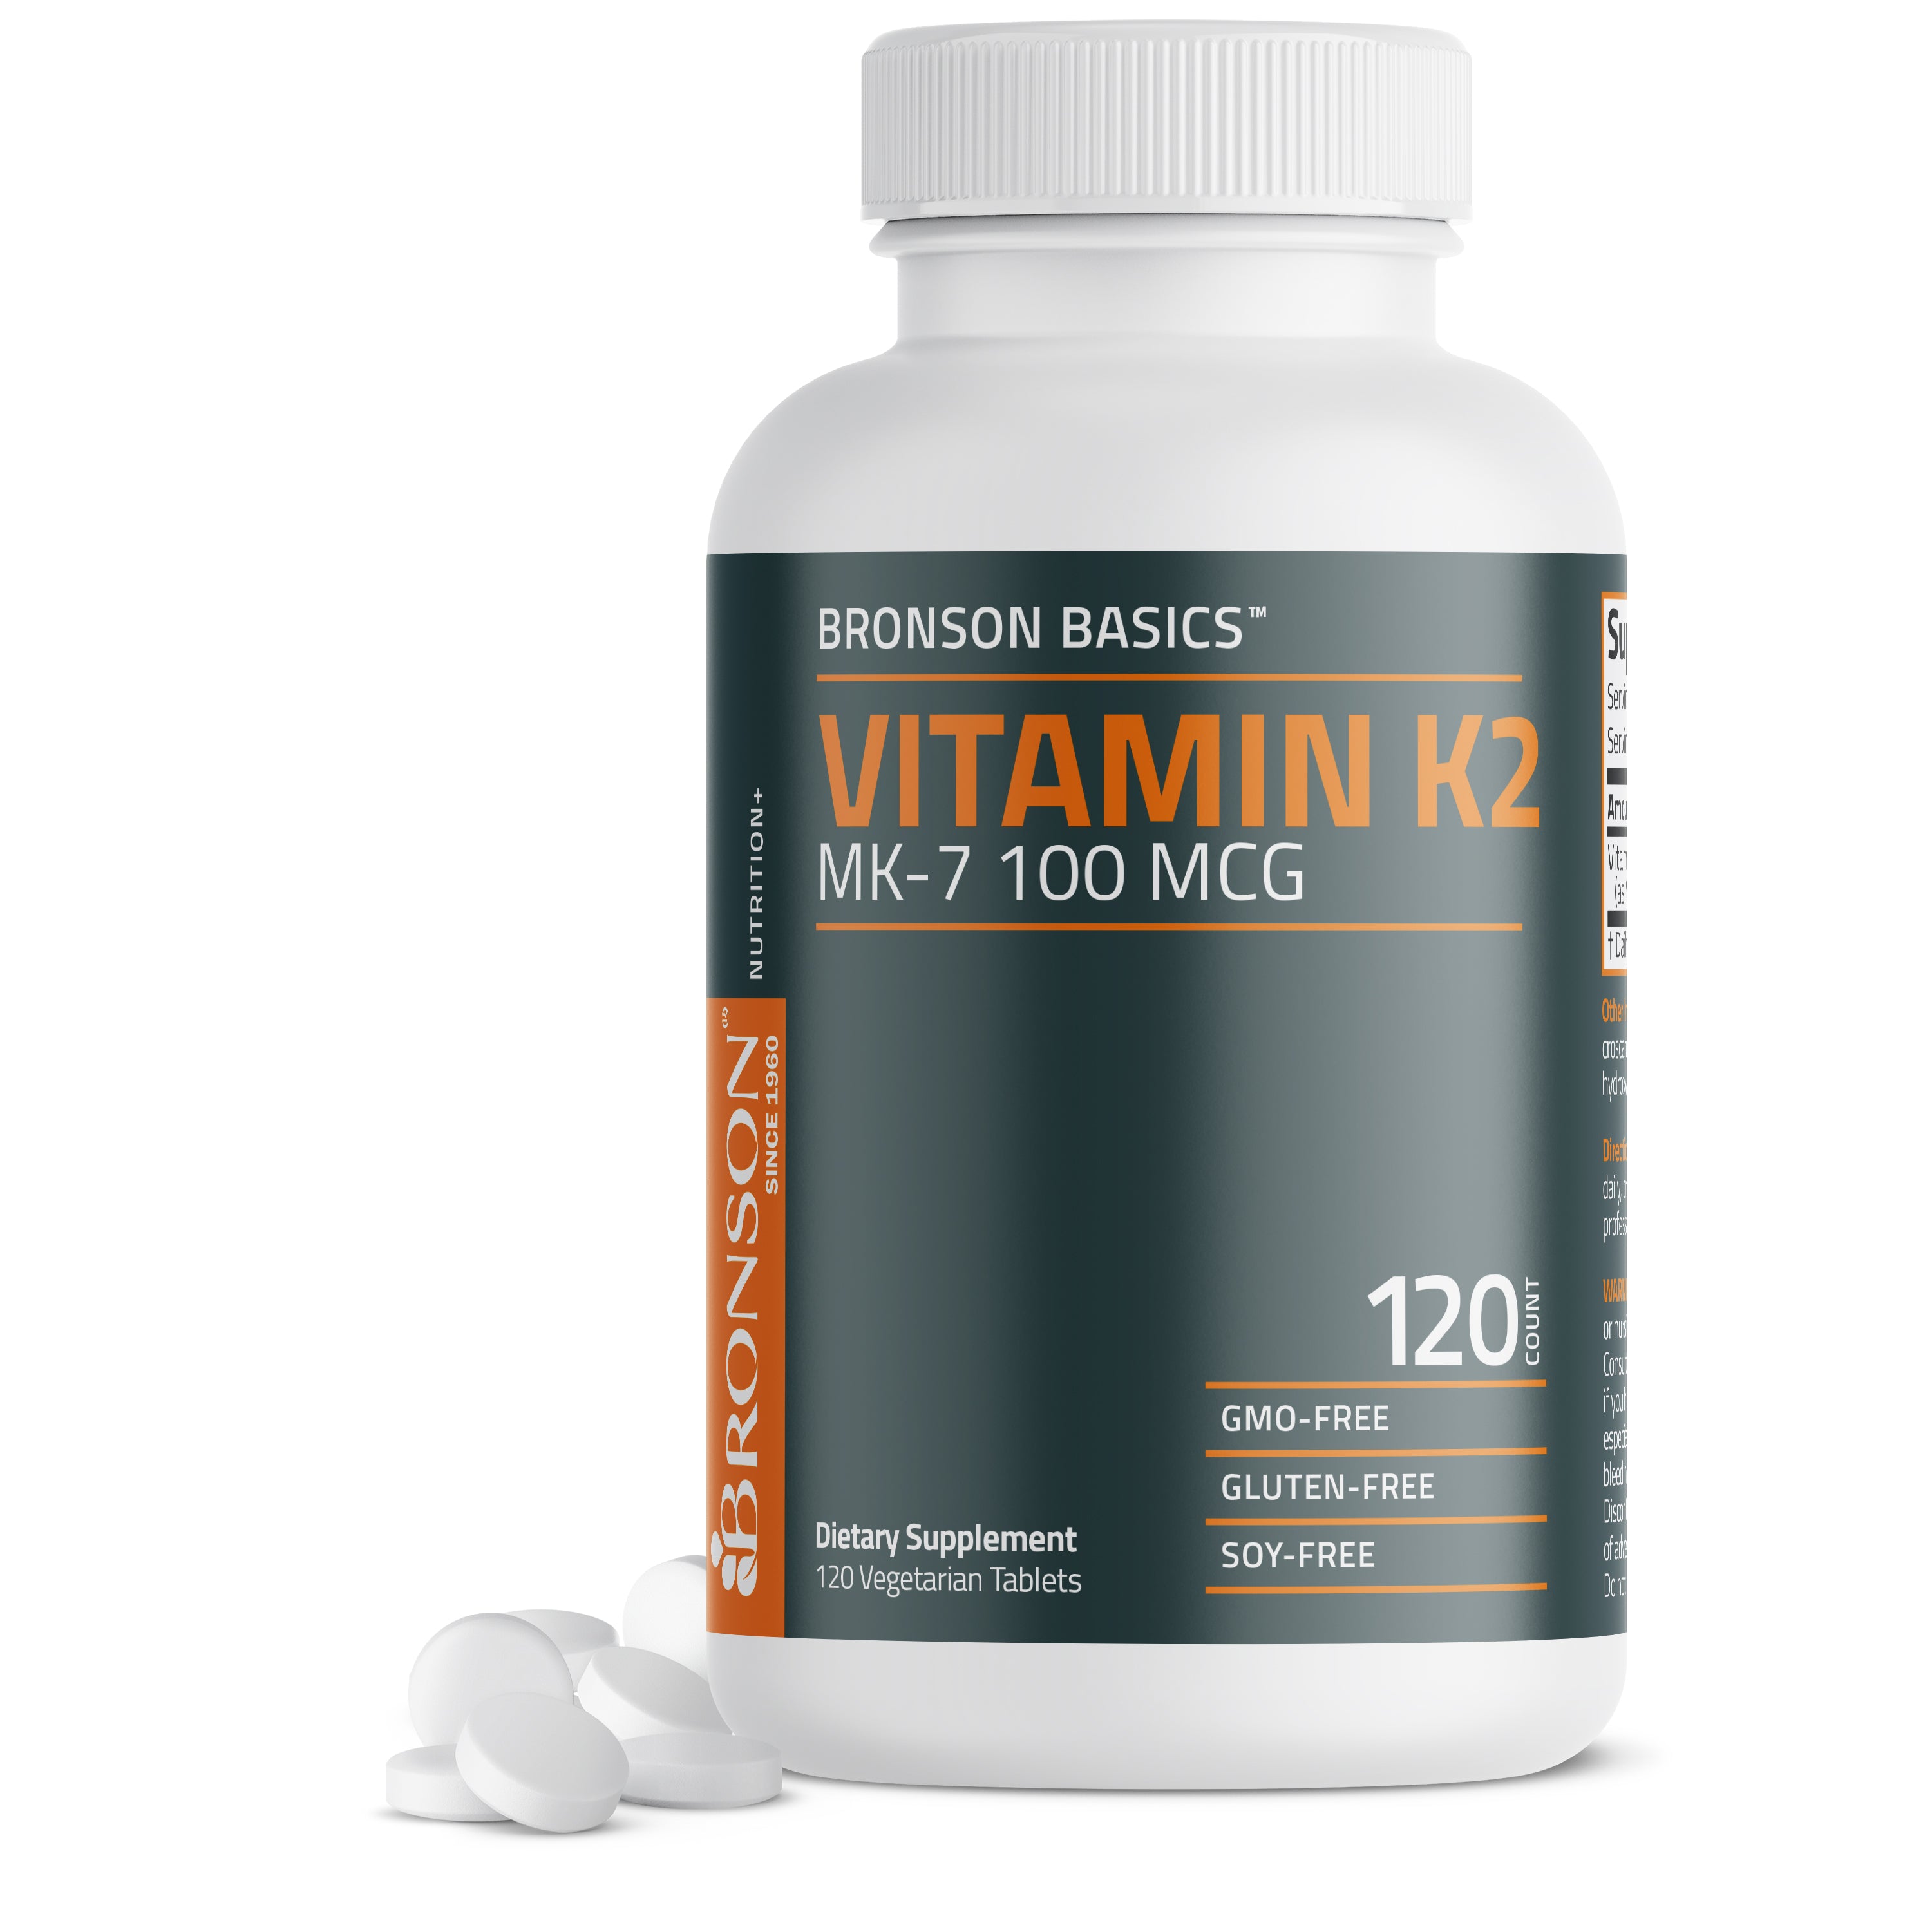 Vitamin K2 MK-7 100 MCG